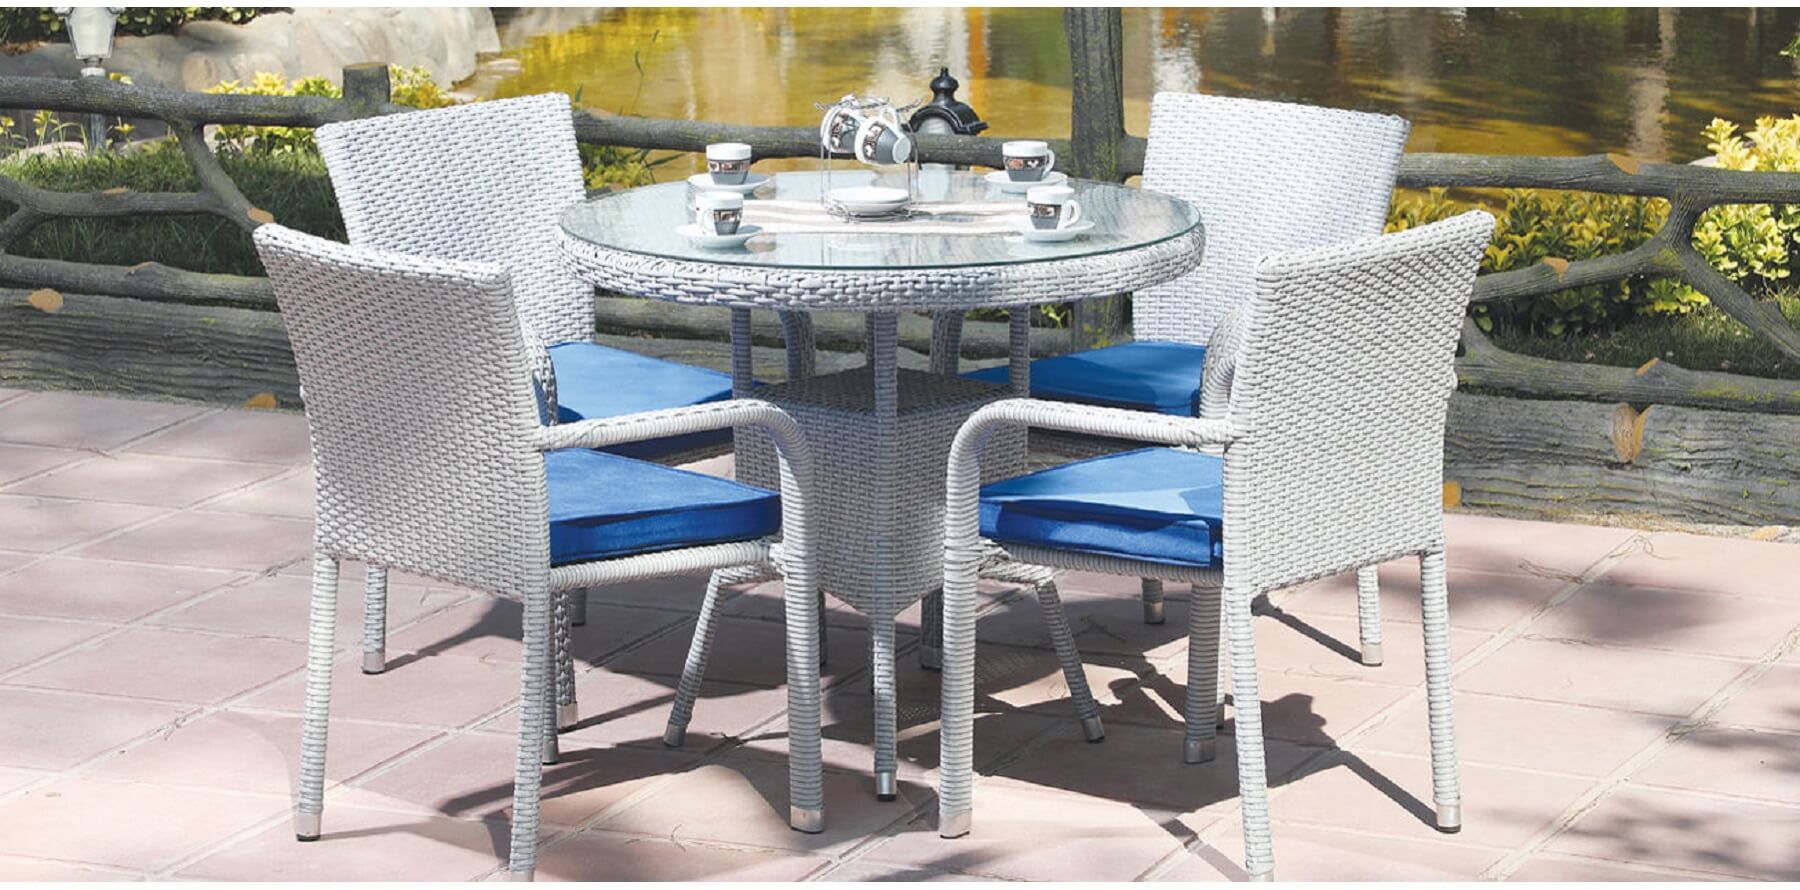 decorose patio dining furniture veronica model0 - ست میز صندلی تراس چهار نفره مدل نیلان -  - patio-dining-furniture